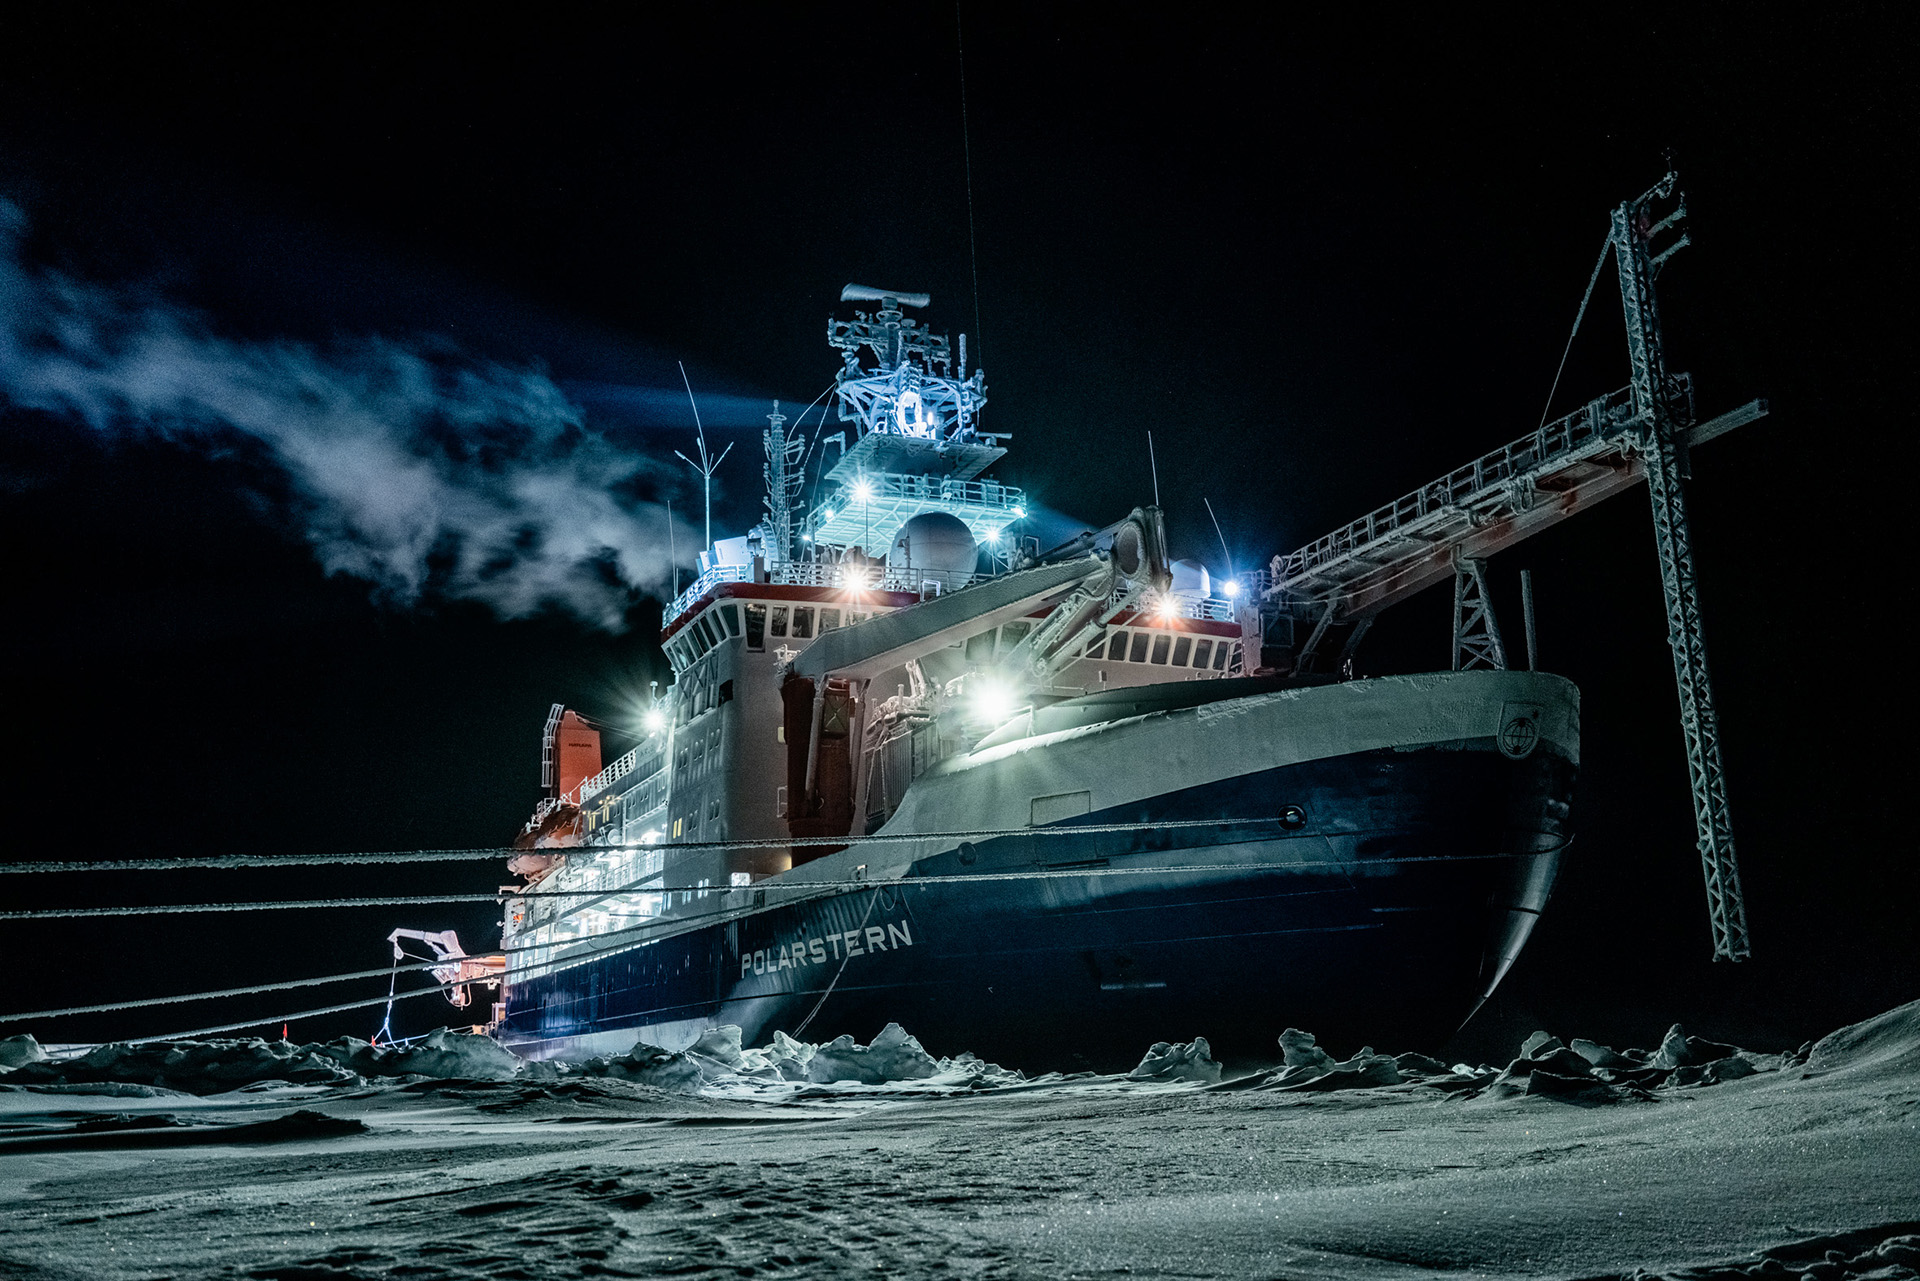 R/V Polarstern during polar night in the Arctic